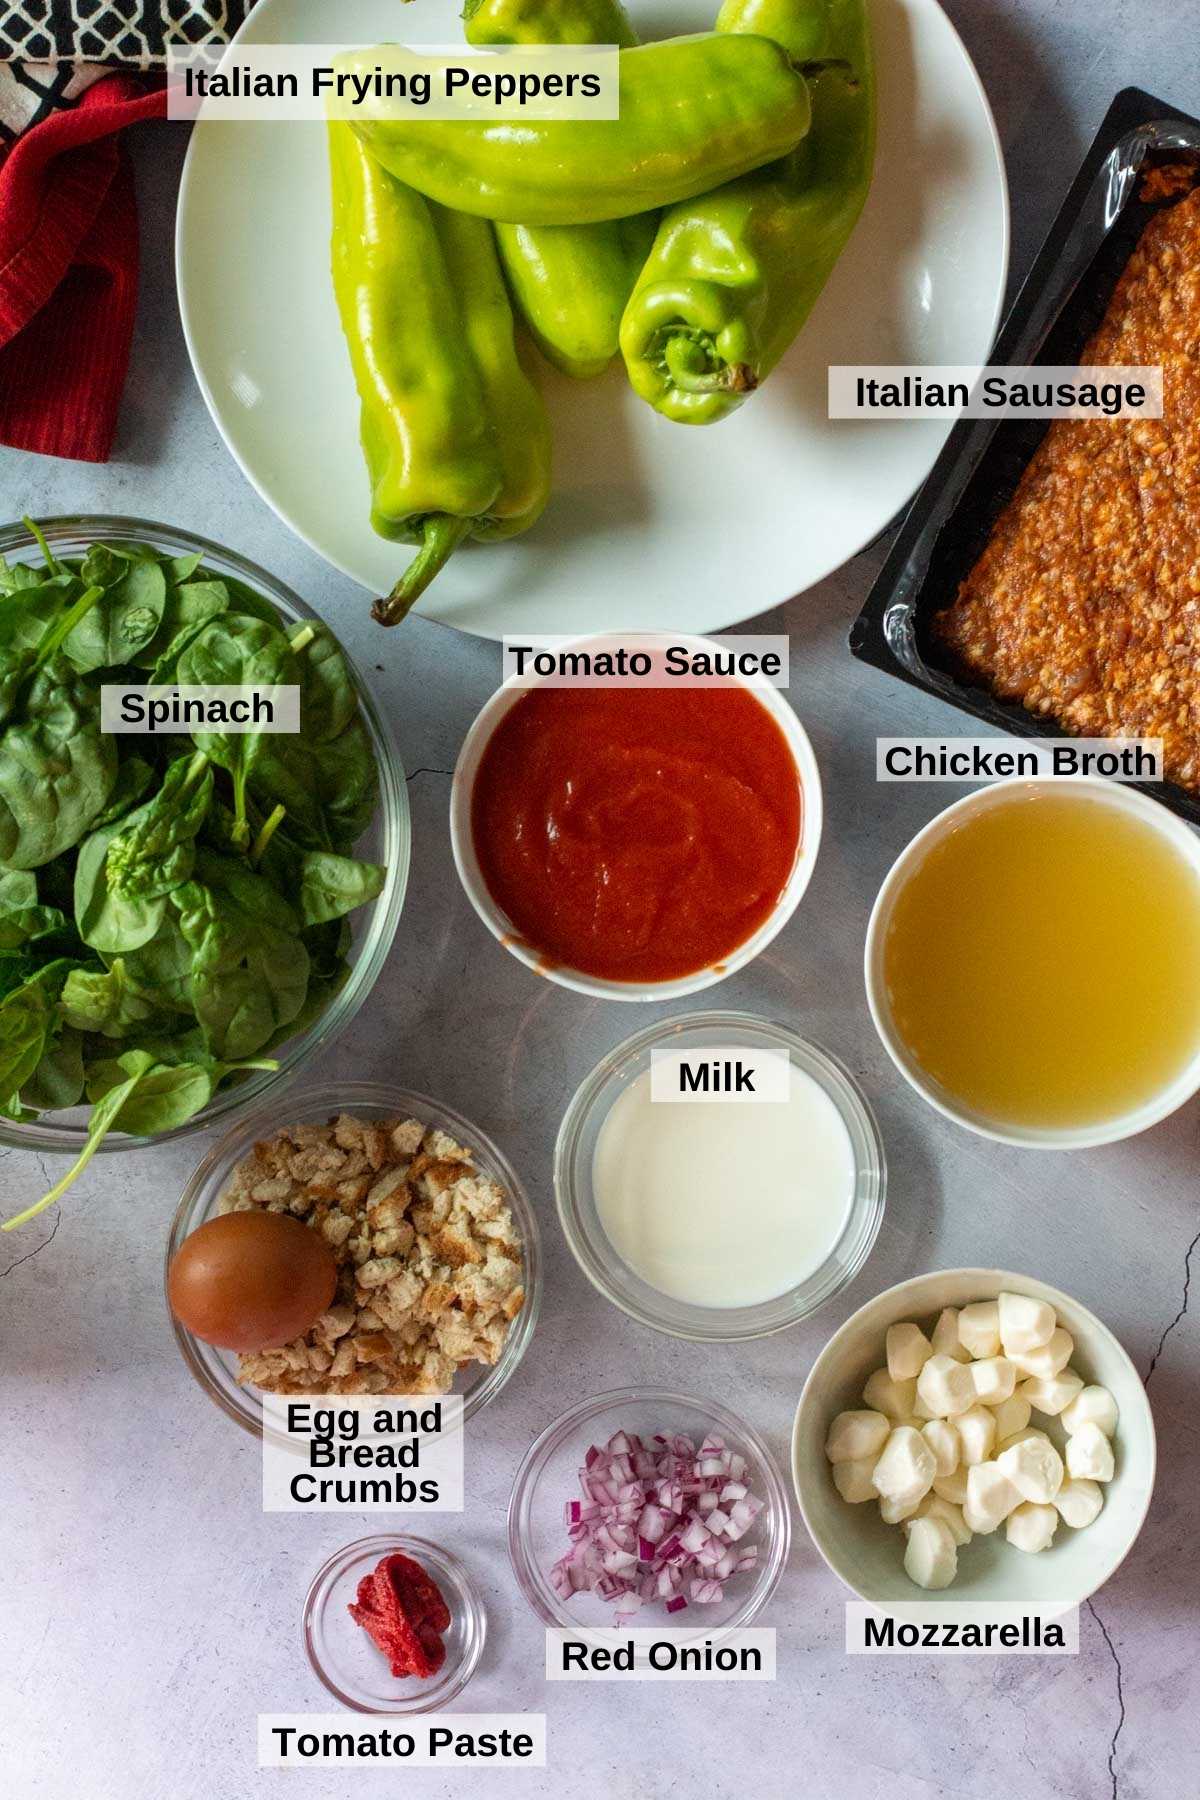 Ingredients to make stuffed Italian Frying Peppers.